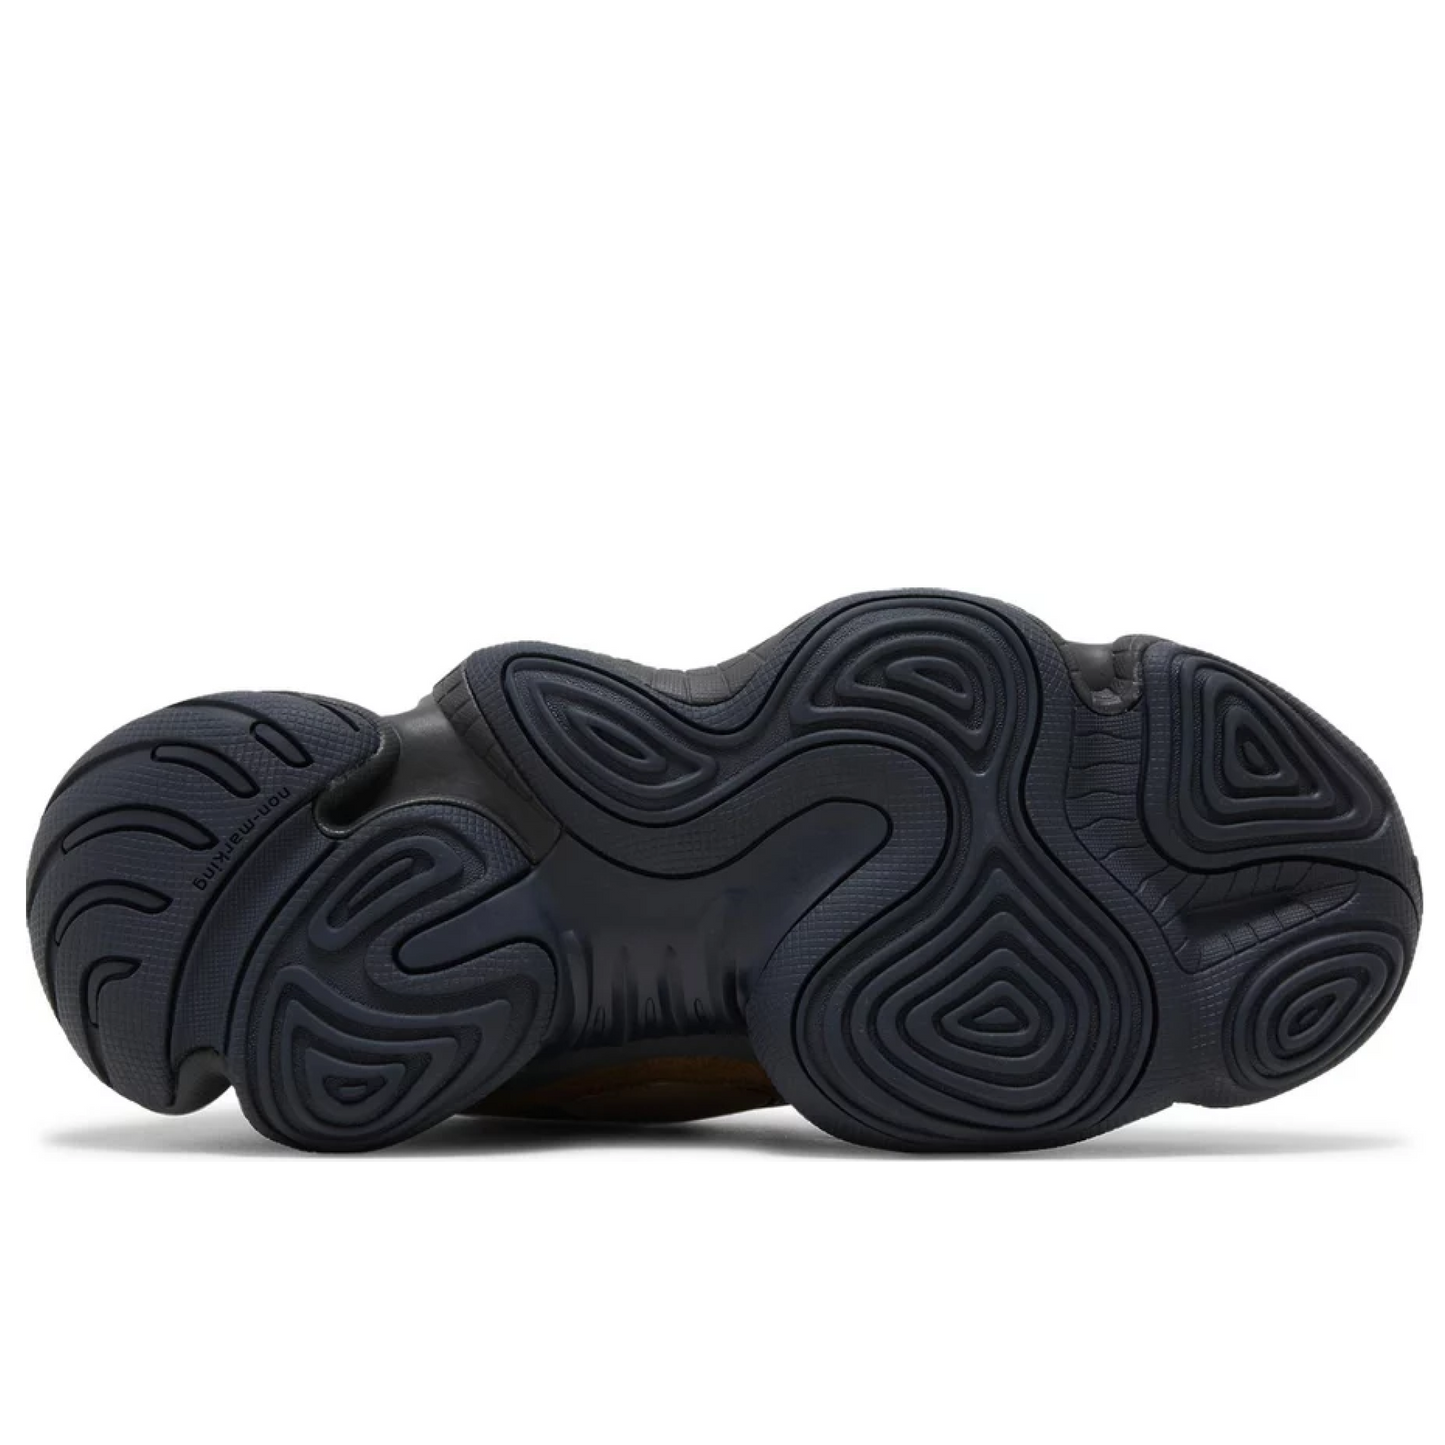 Adidas Yeezy 500 High Taupe Black